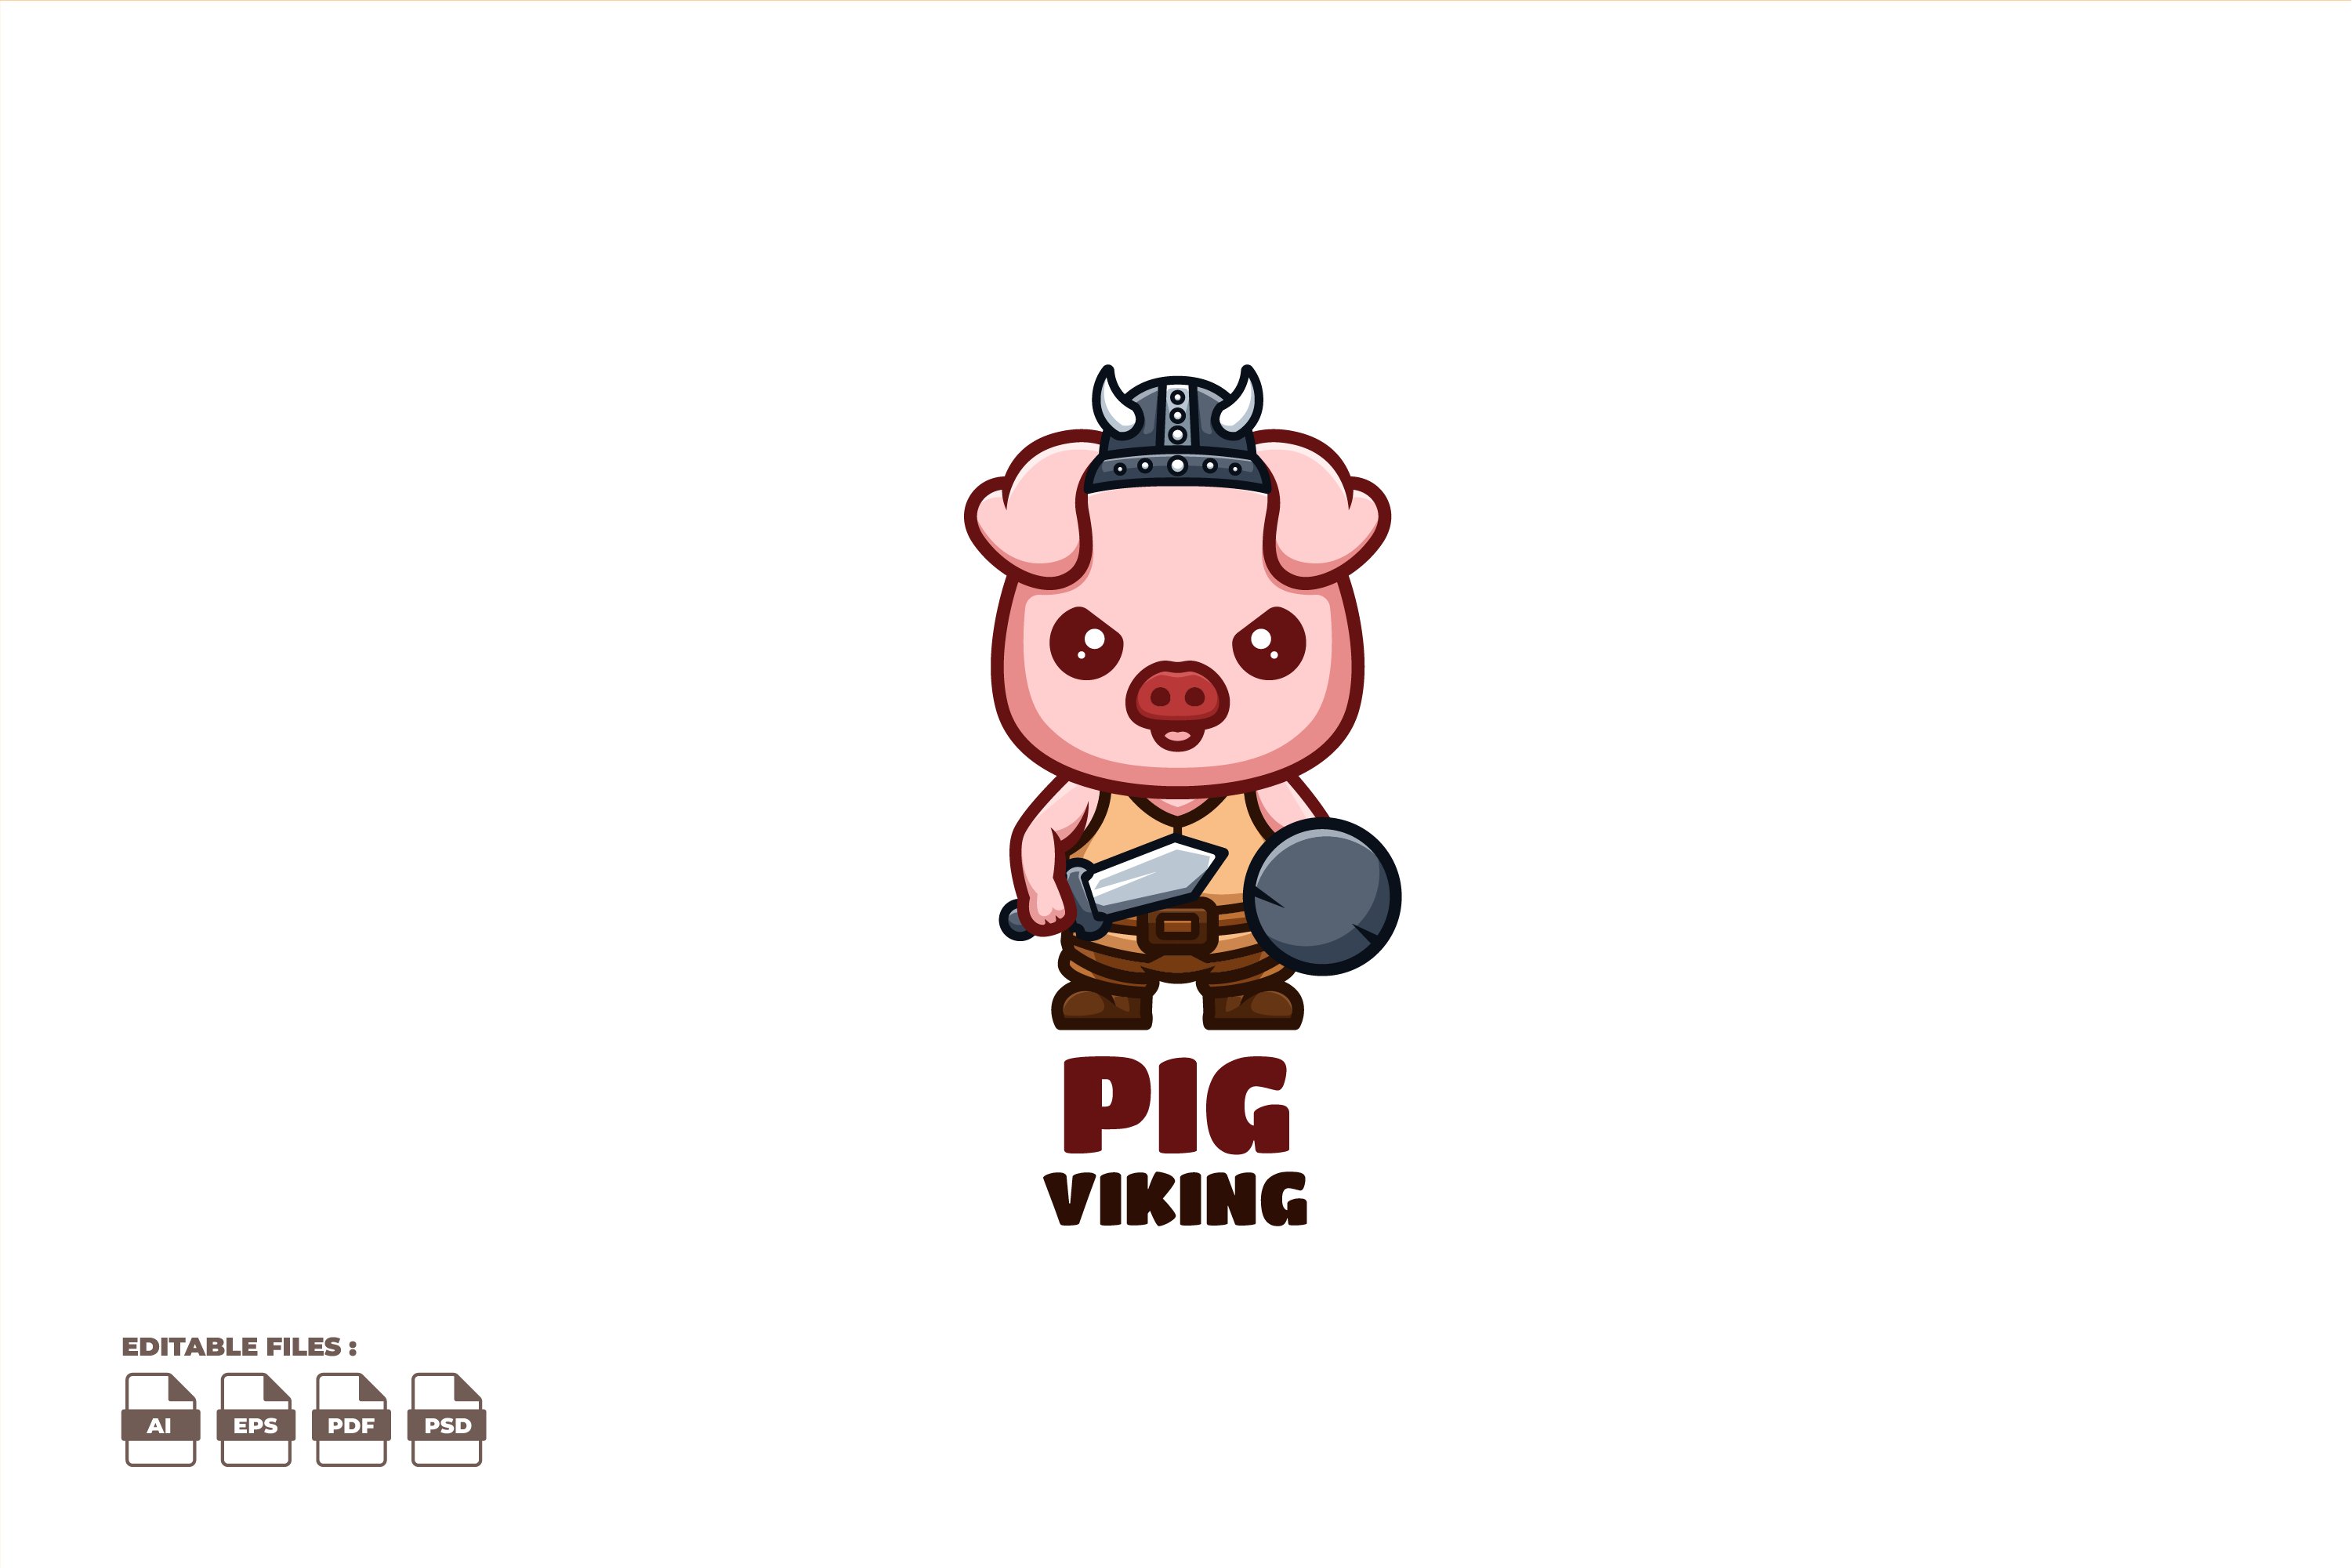 Viking Pig Cute Mascot Logo cover image.